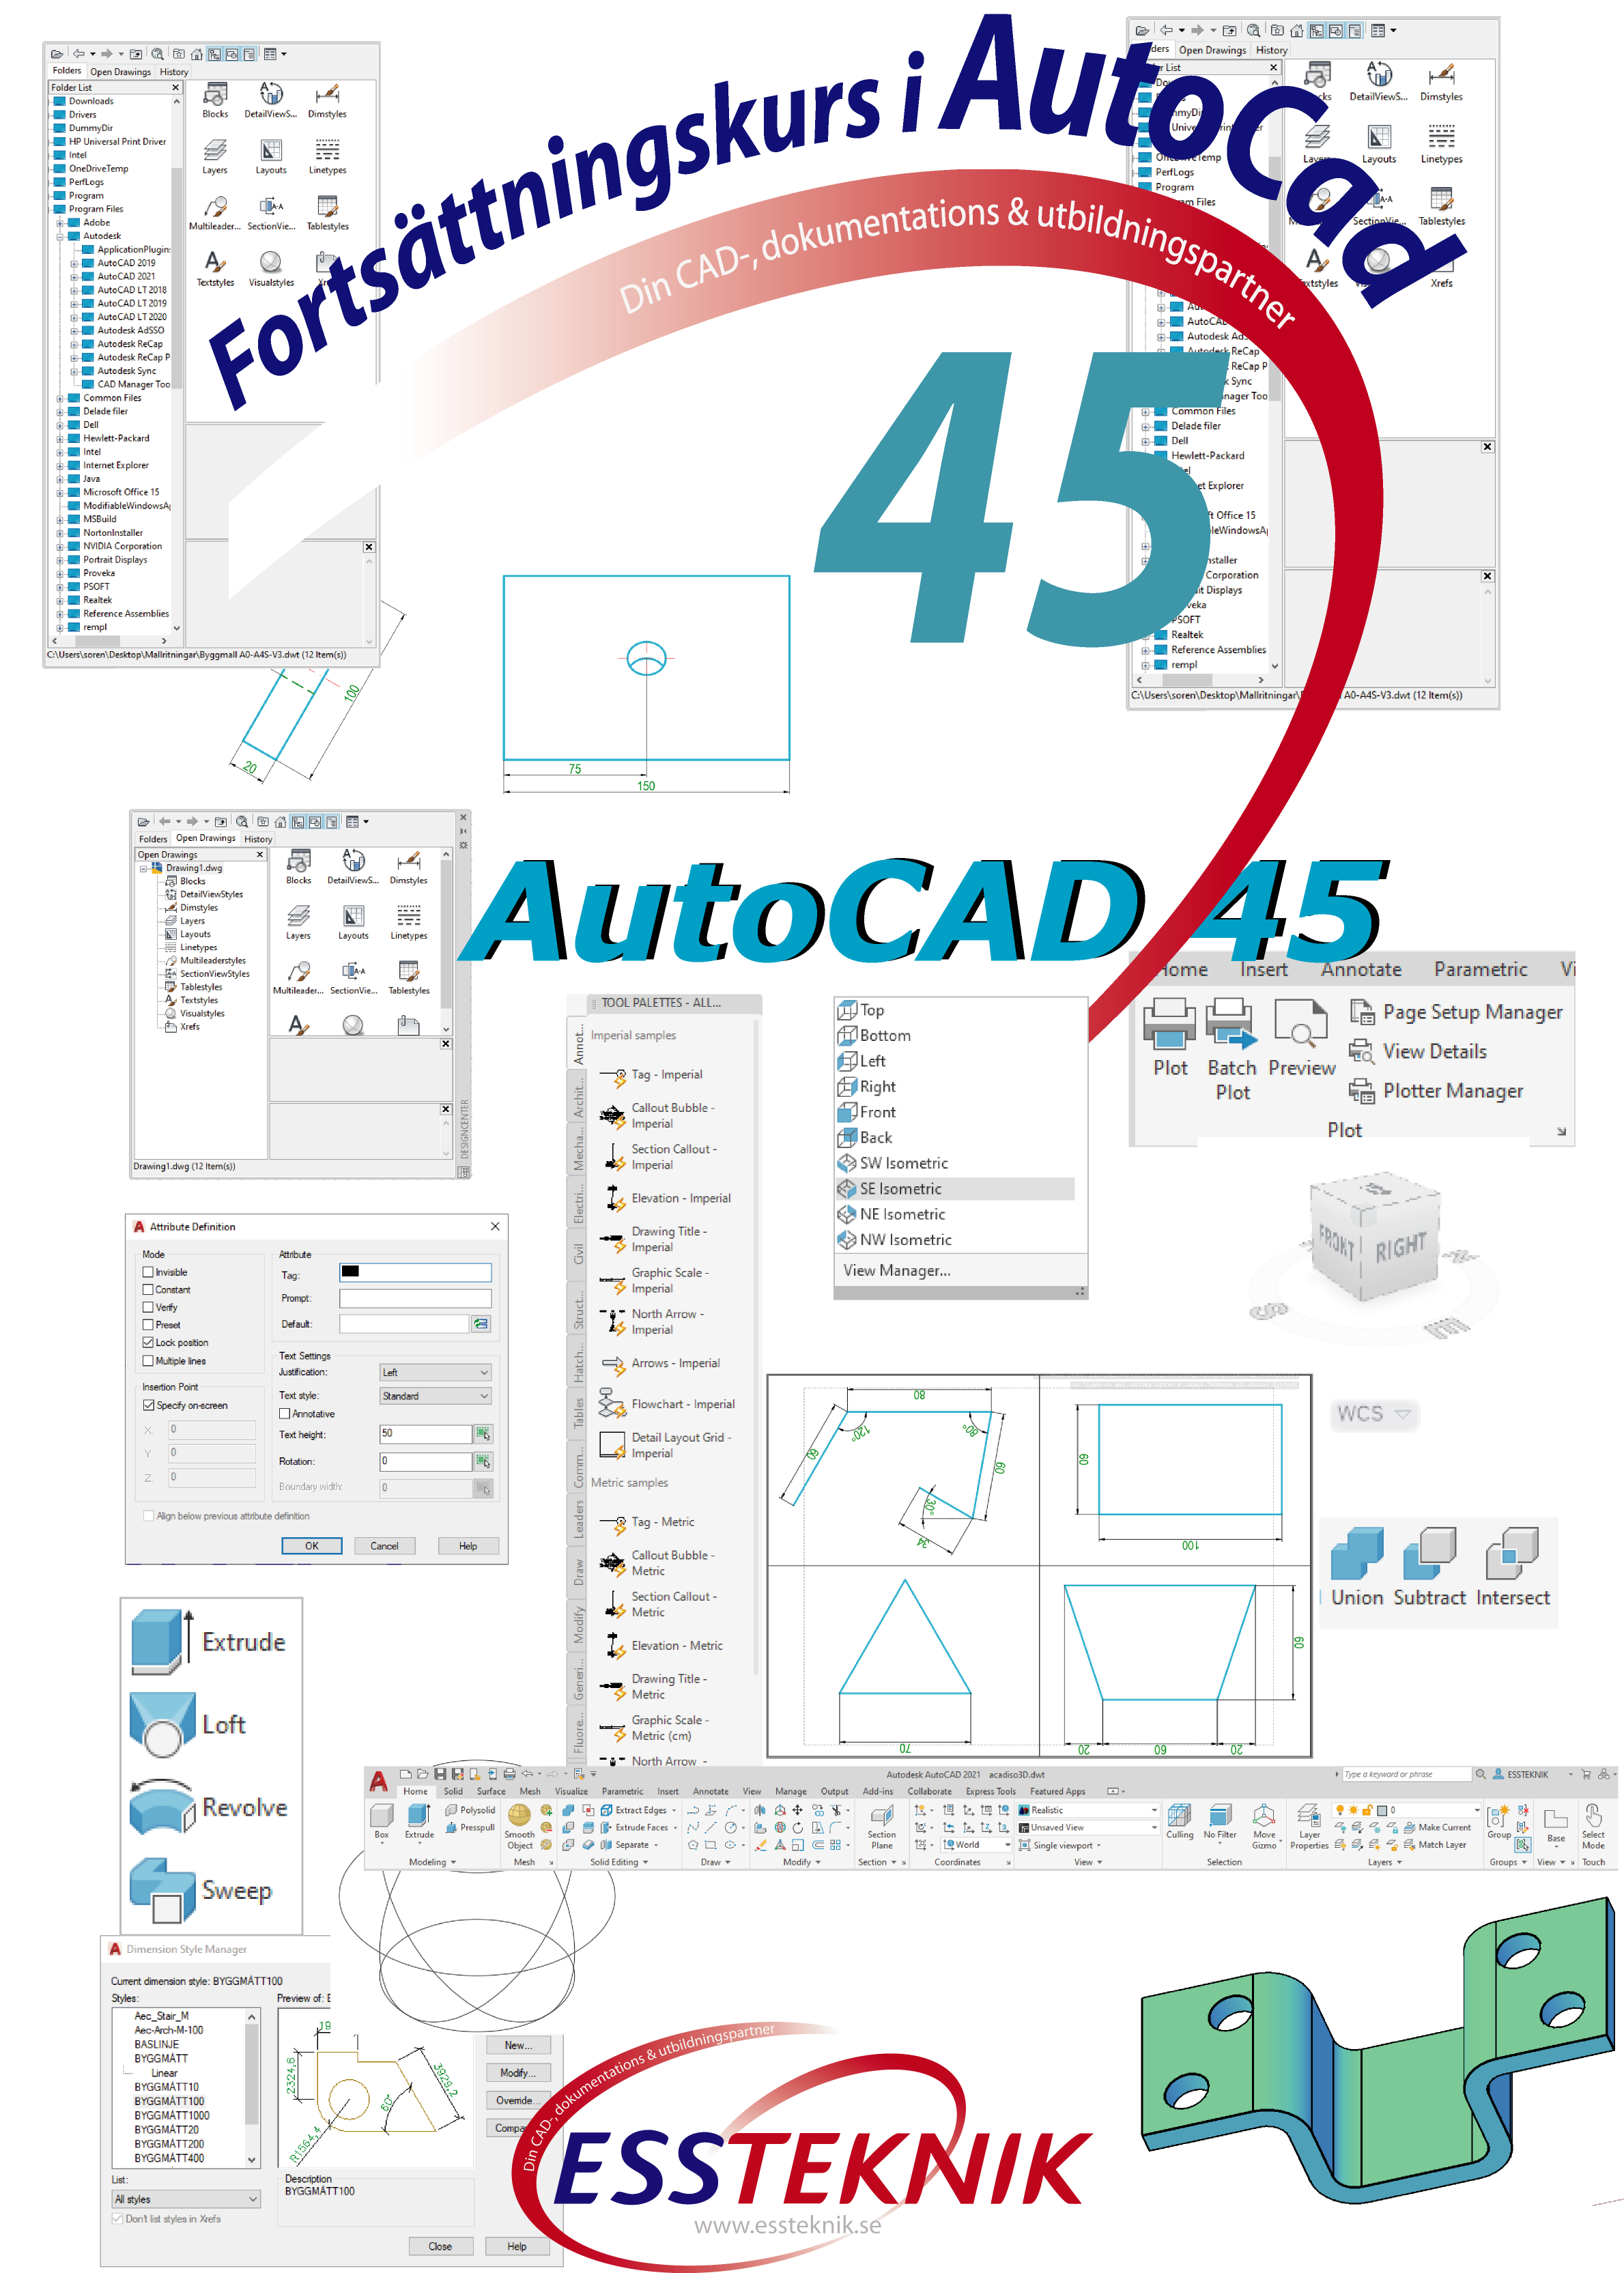 AutoCAD 45